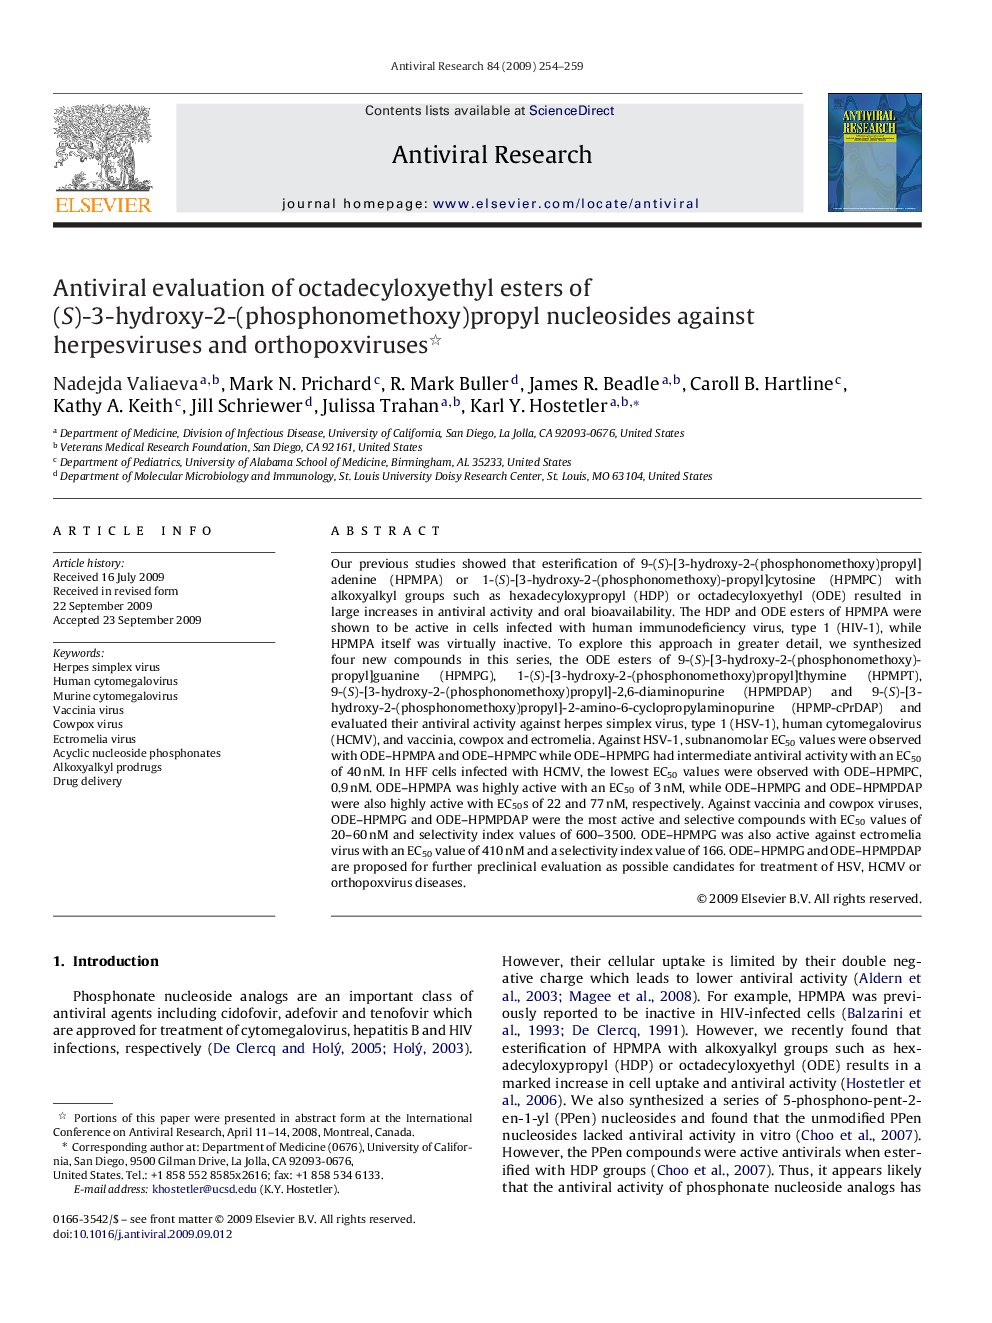 Antiviral evaluation of octadecyloxyethyl esters of (S)-3-hydroxy-2-(phosphonomethoxy)propyl nucleosides against herpesviruses and orthopoxviruses 